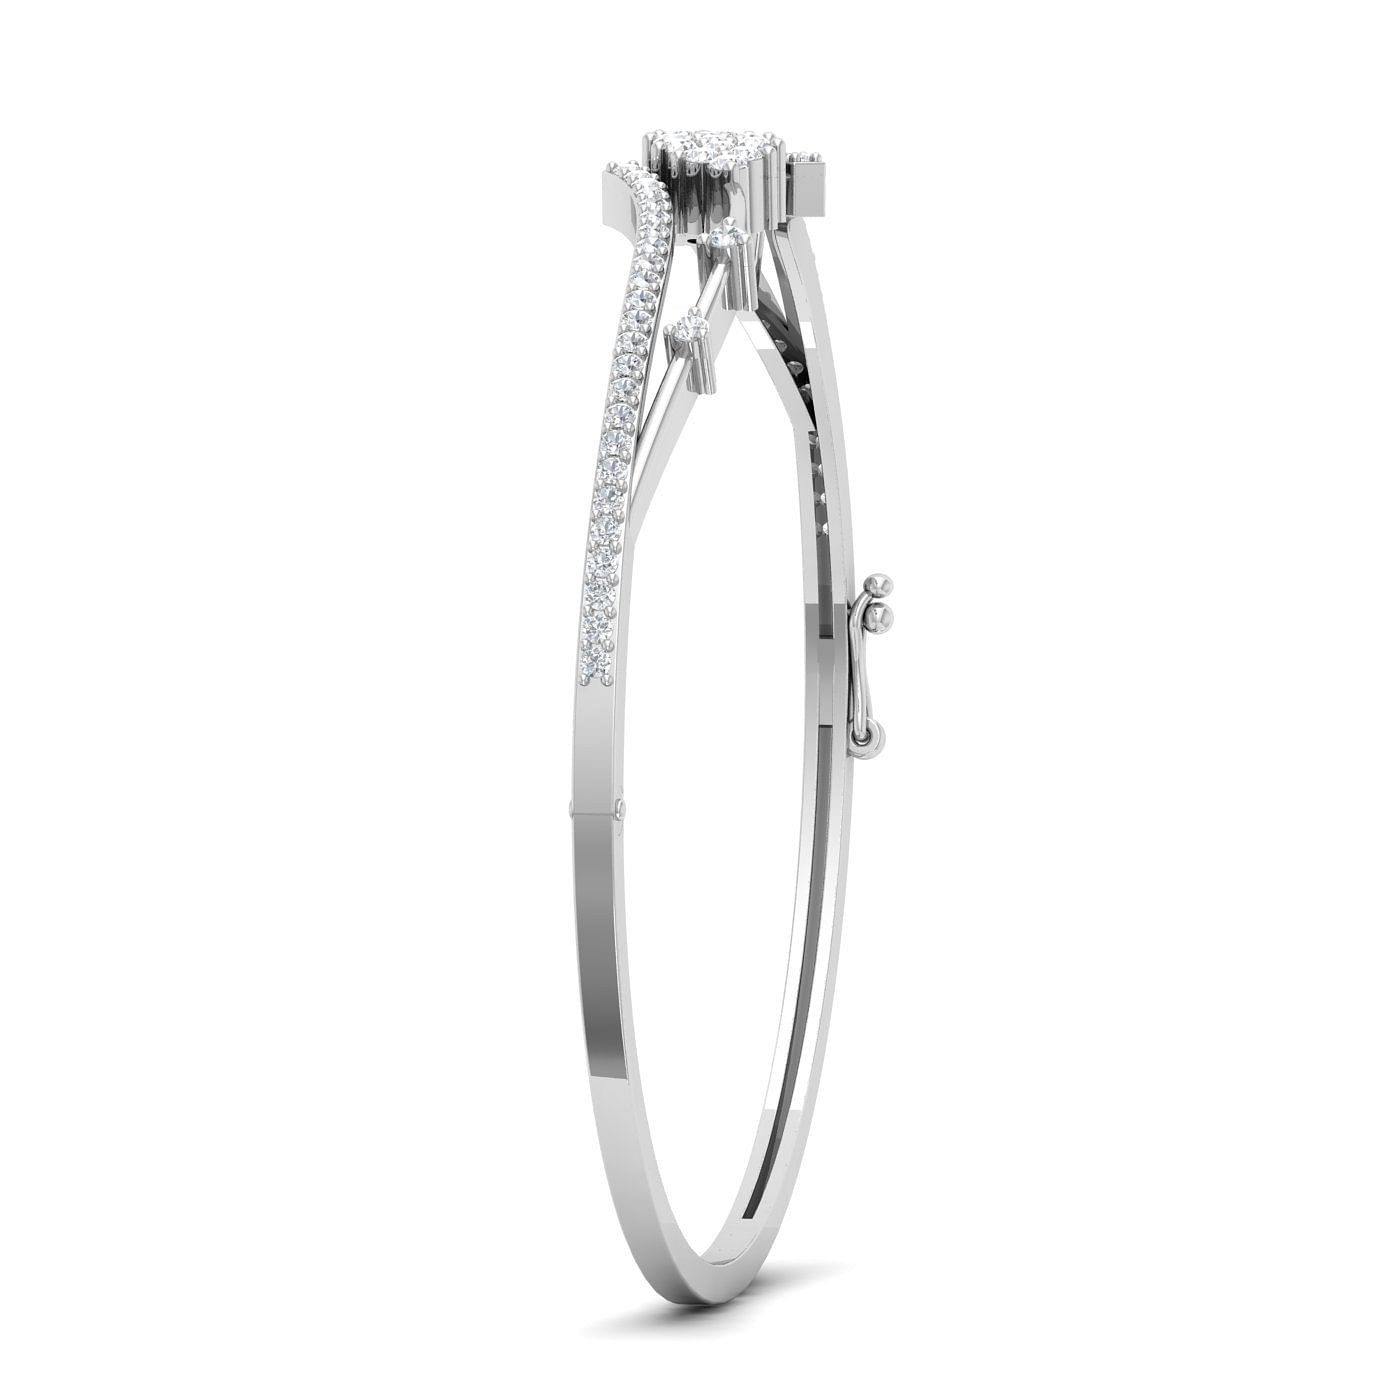 White gold Tuberose Diamond Bracelet engagement gift